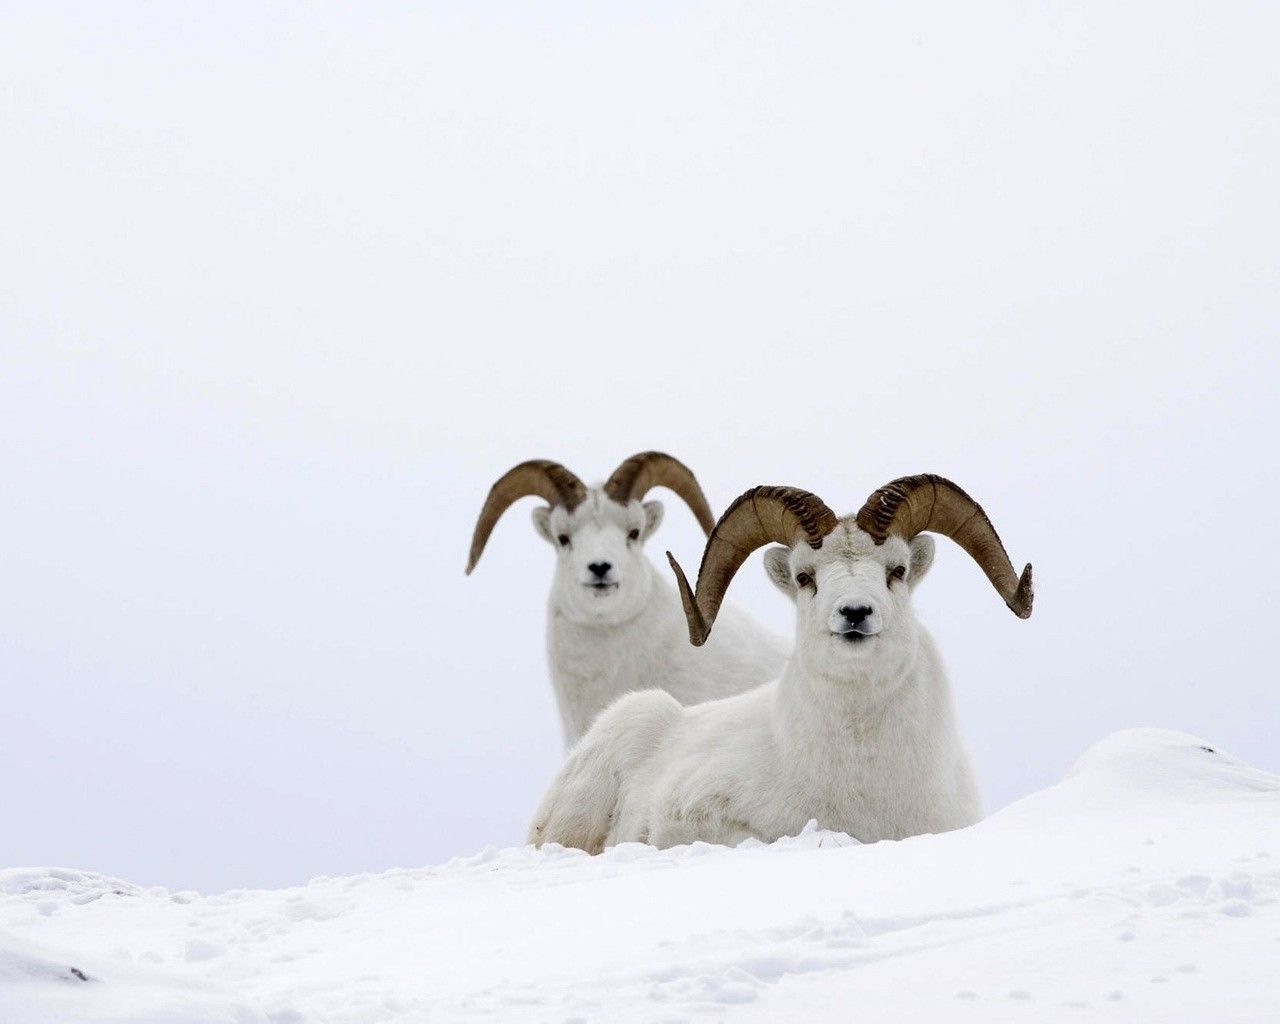 winter season snow frozen goats 1280x1024 wallpaper High Quality Wallpaper, High Definition Wallpaper